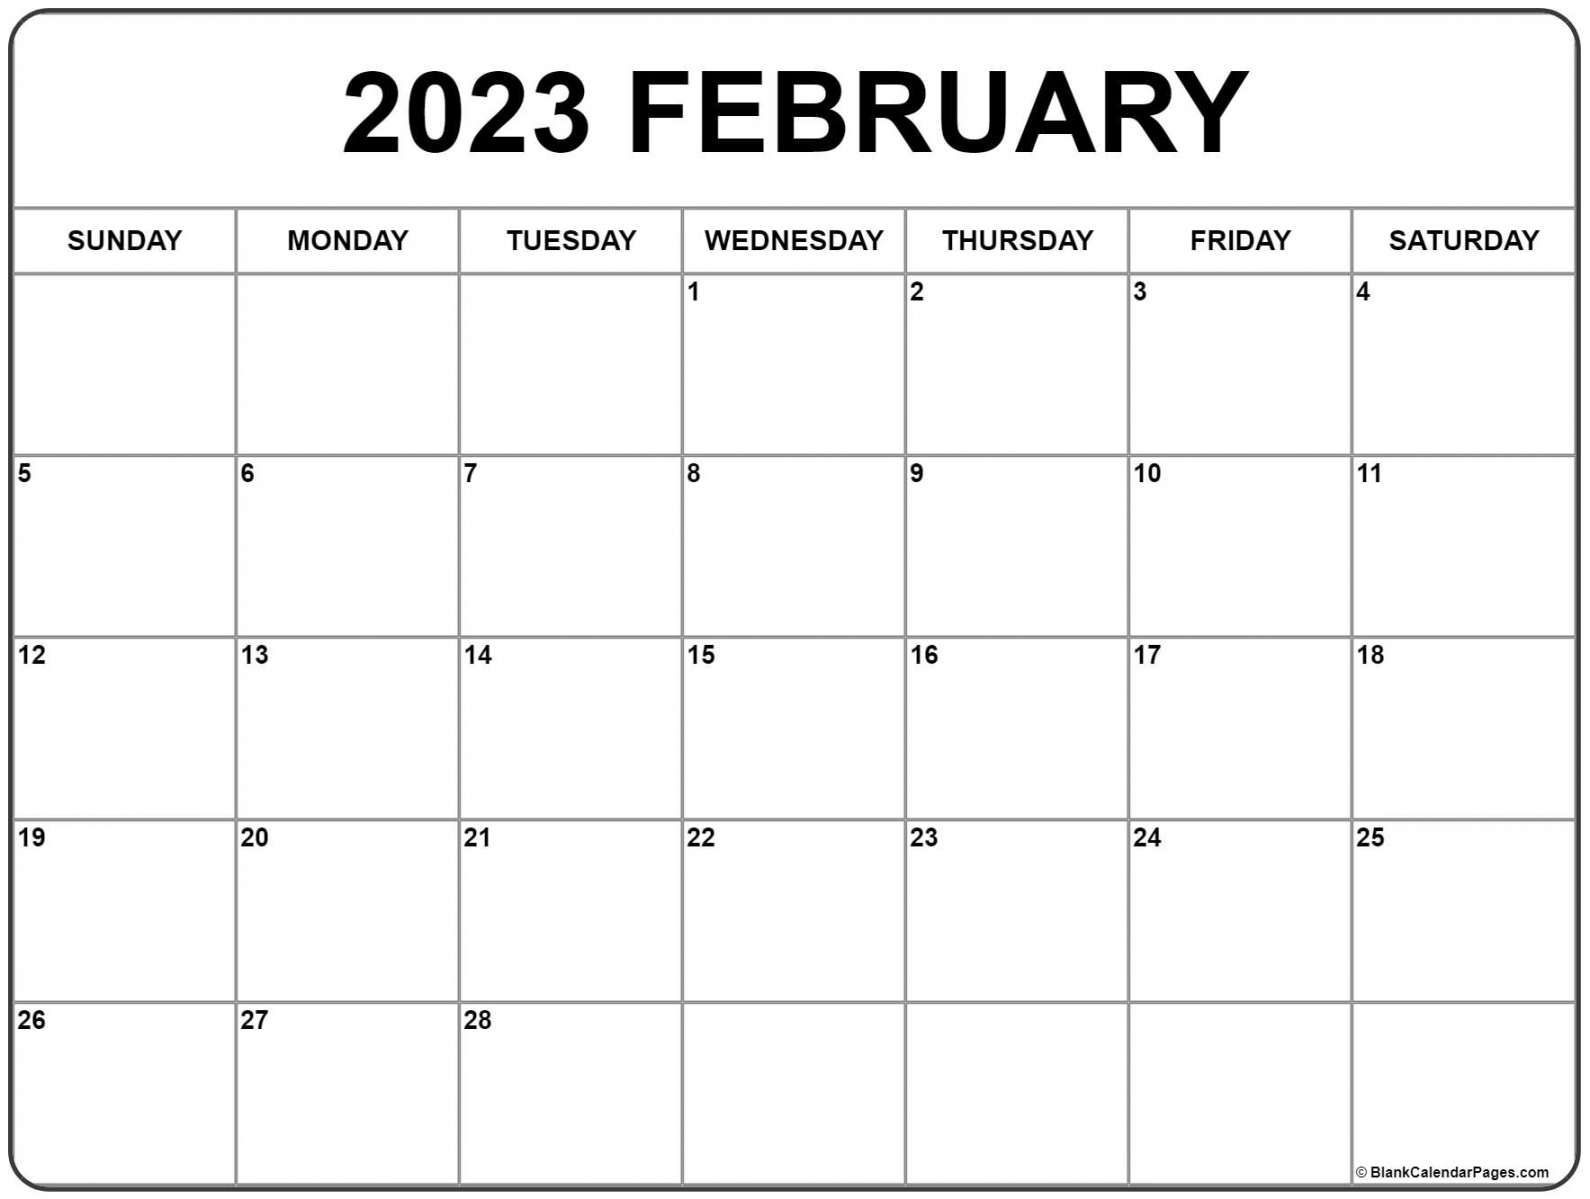 Free Printable February Calendar - Printable - February  calendar  free printable calendar